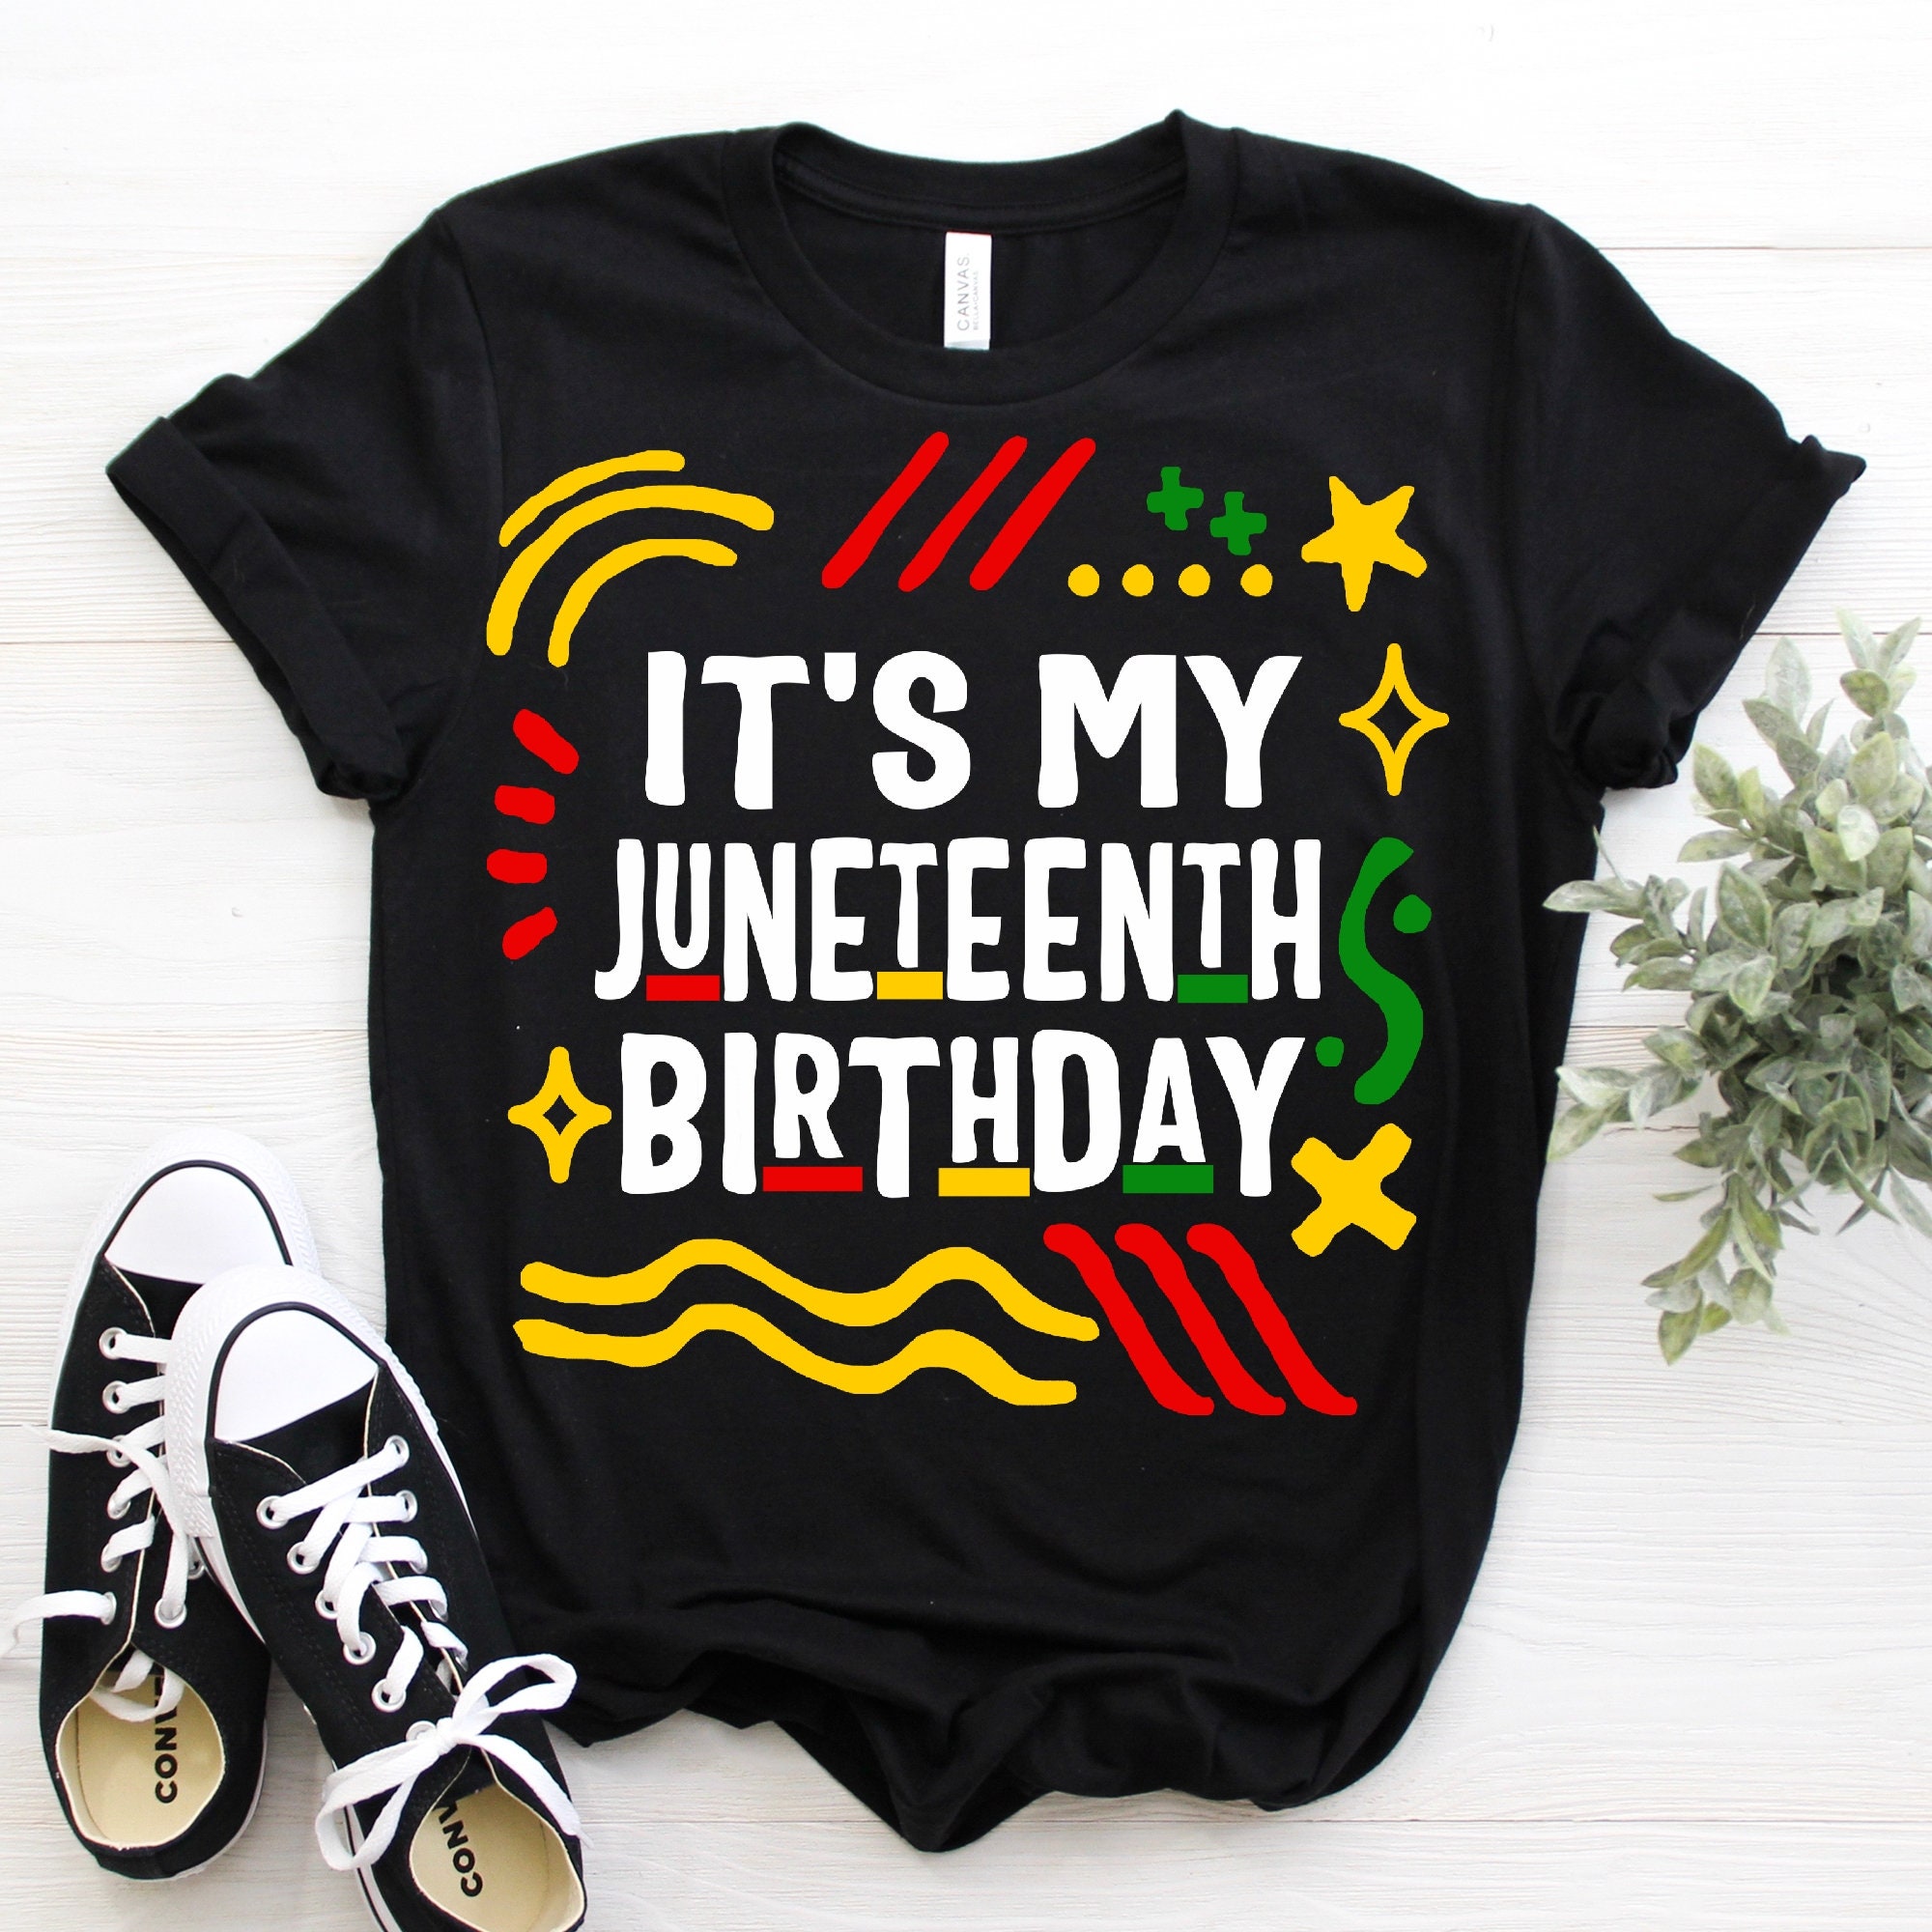 It's My Juneteenth Birthday, African American Melanin Celebration Of June 19th 1865 T Shirt